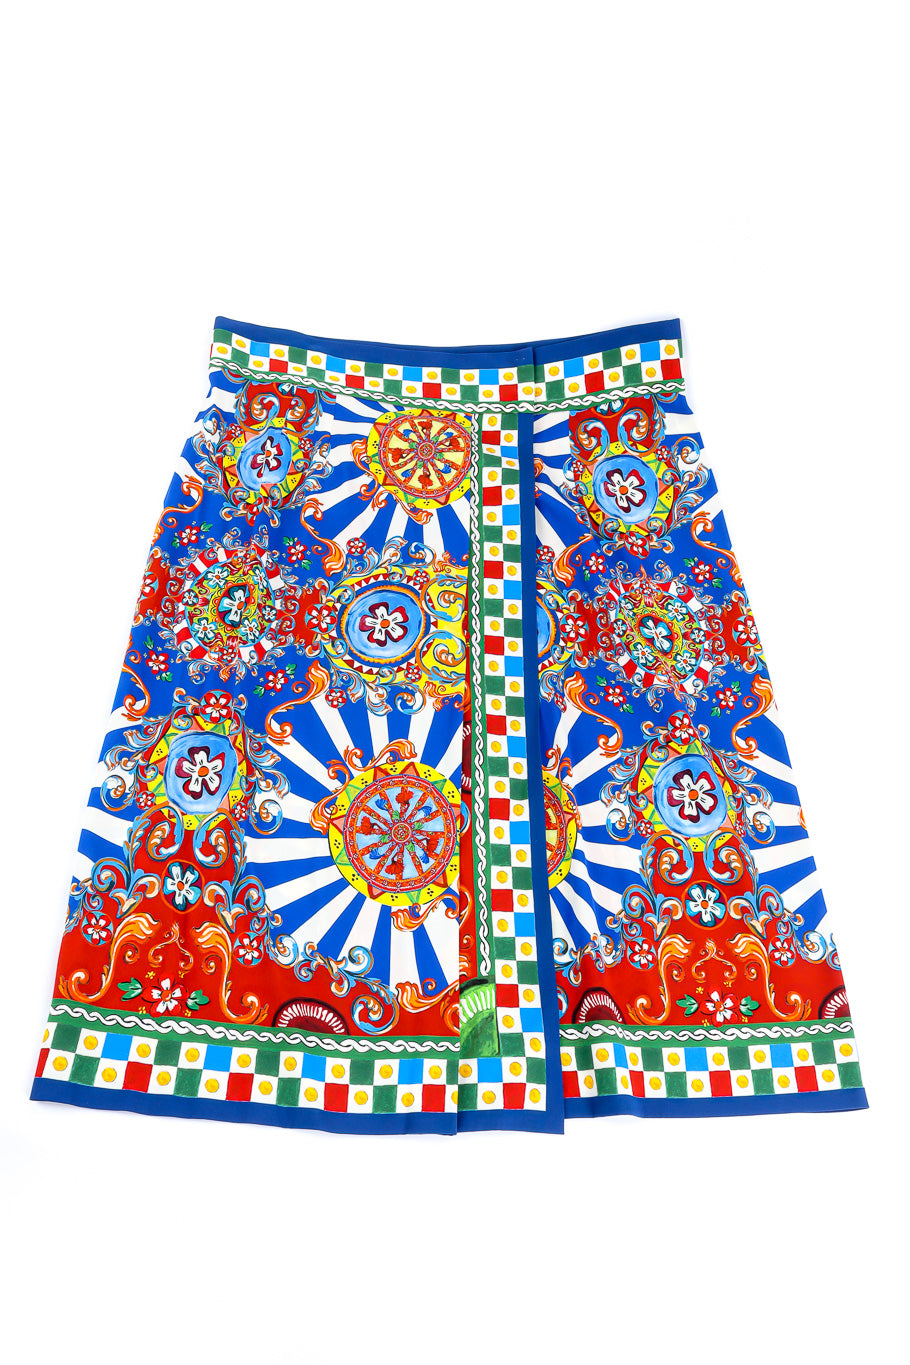 Dolce & Gabbana multicolor printed skirt designer flat-lay @recessla